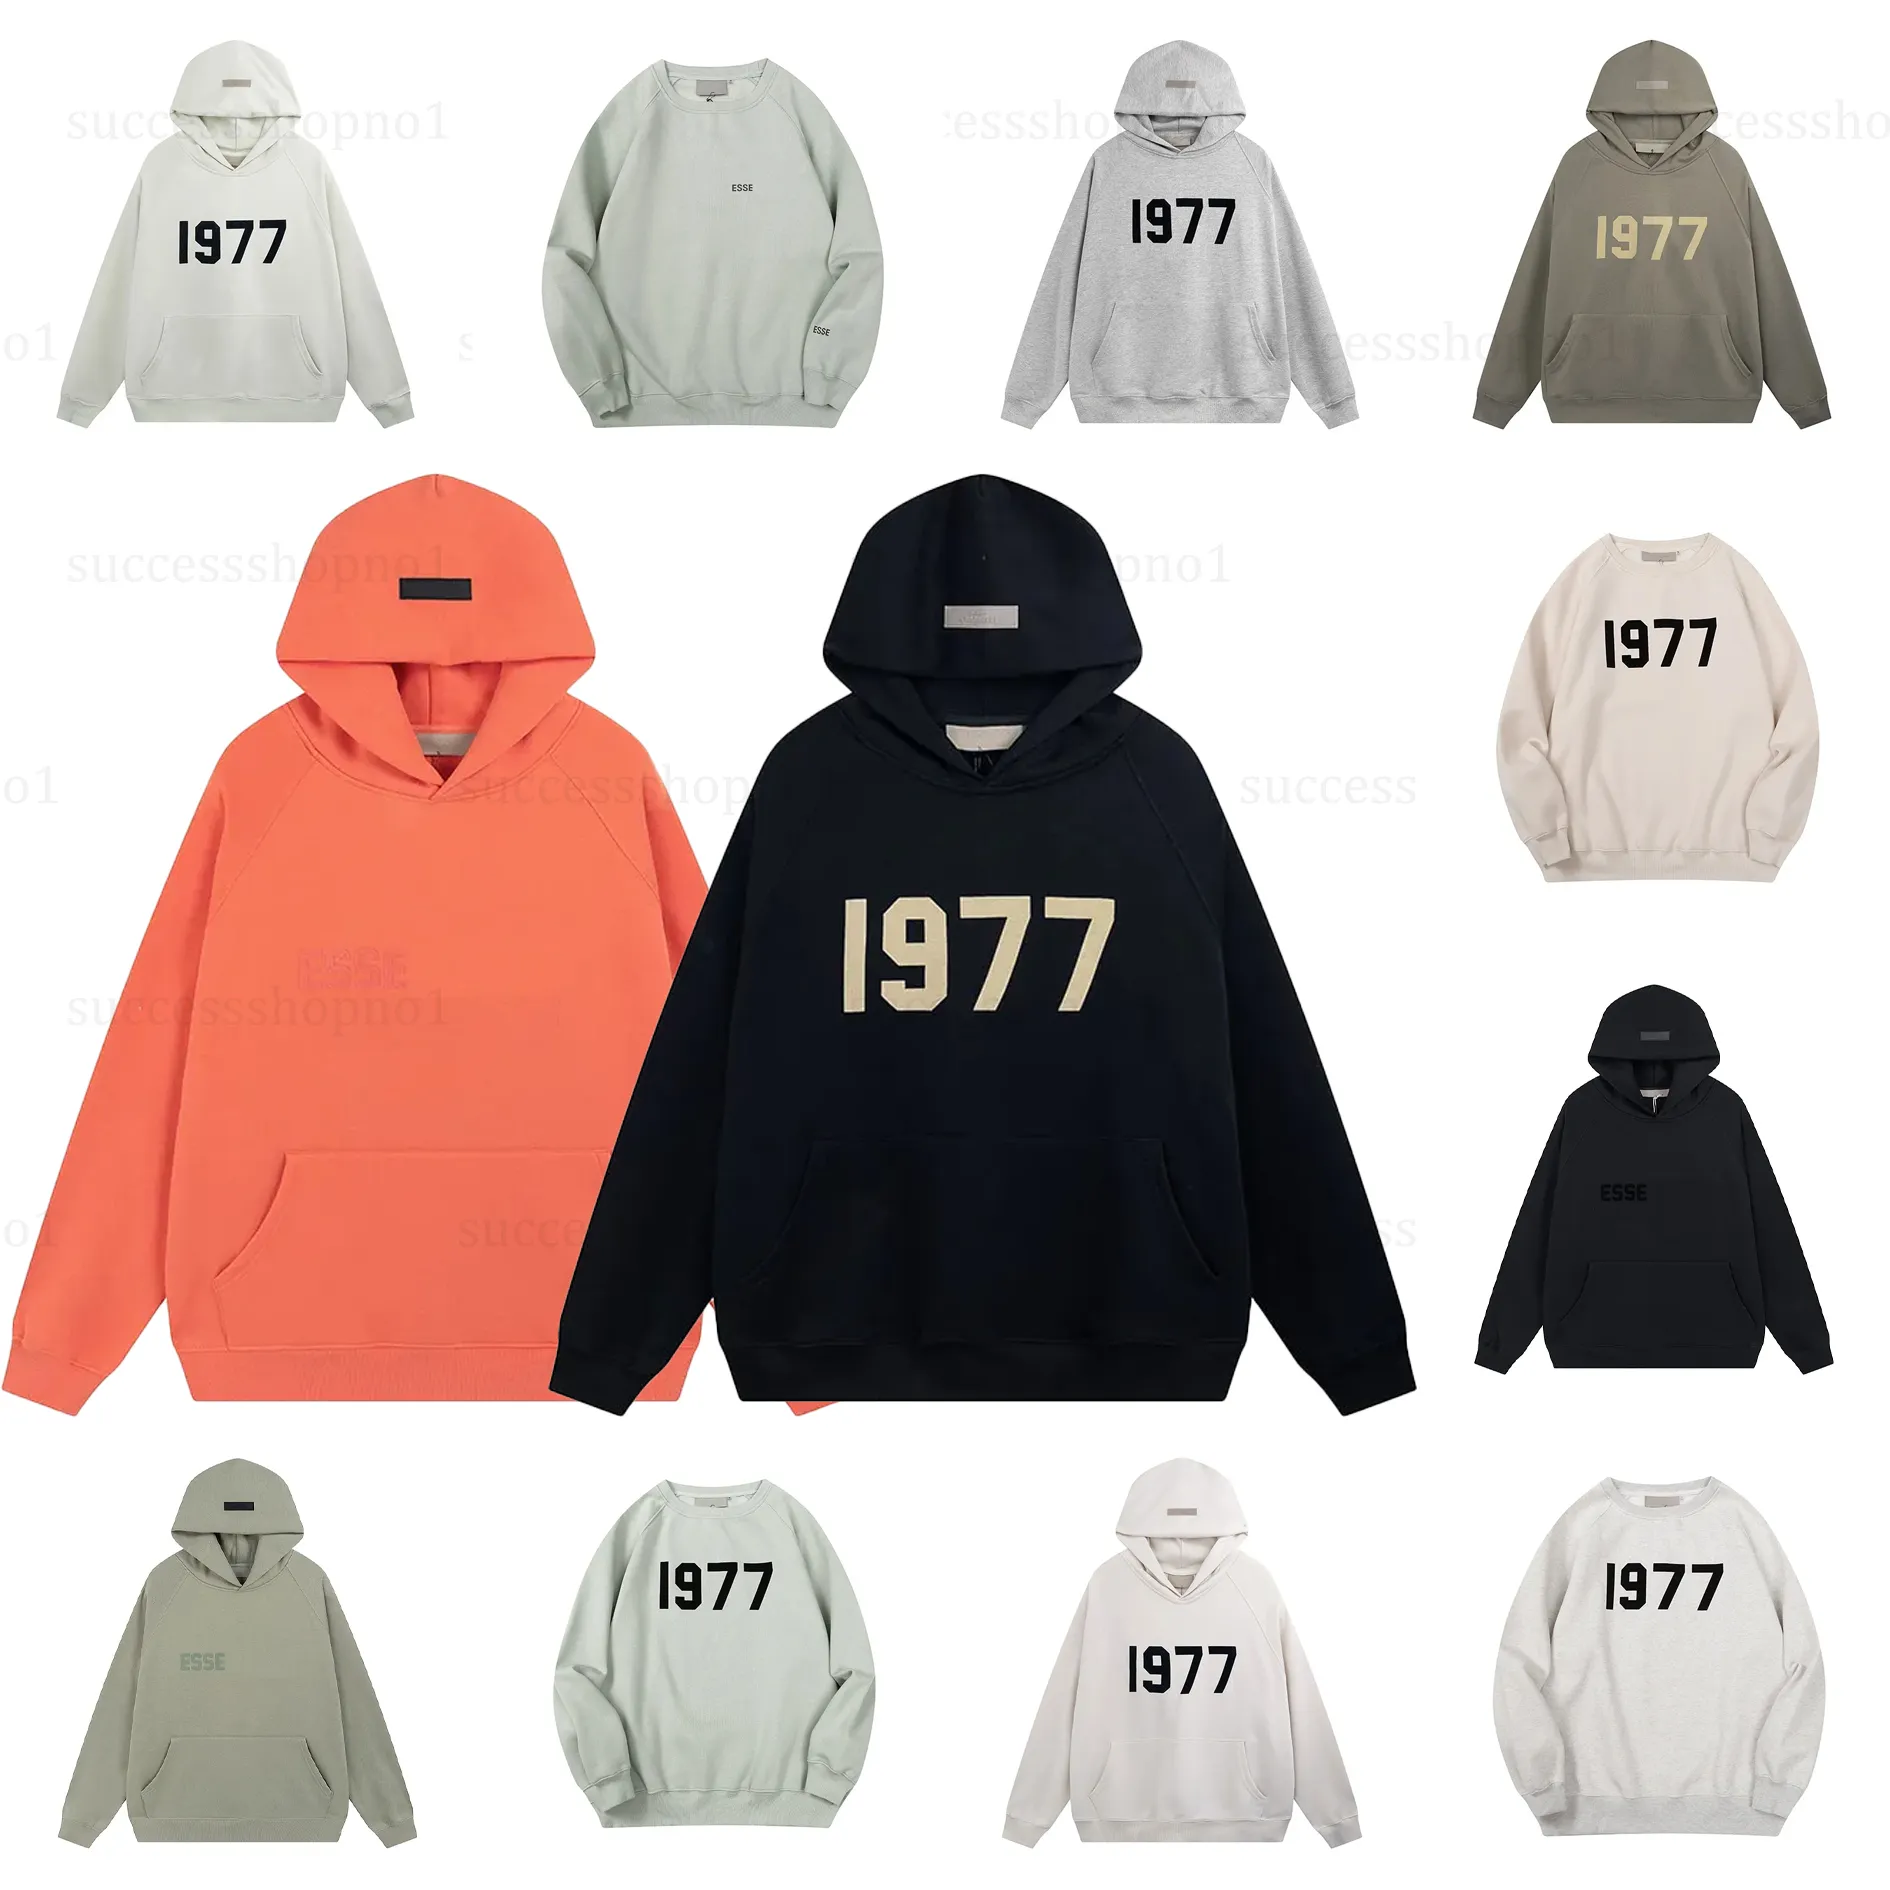 designer hoodie hoodies essientials hoodie for Men & Women - Sweatshirts Zip-Up Front, Black Print Letter Detail, Dream OFG Collection, Stylish Hoodies for Everyday Wear